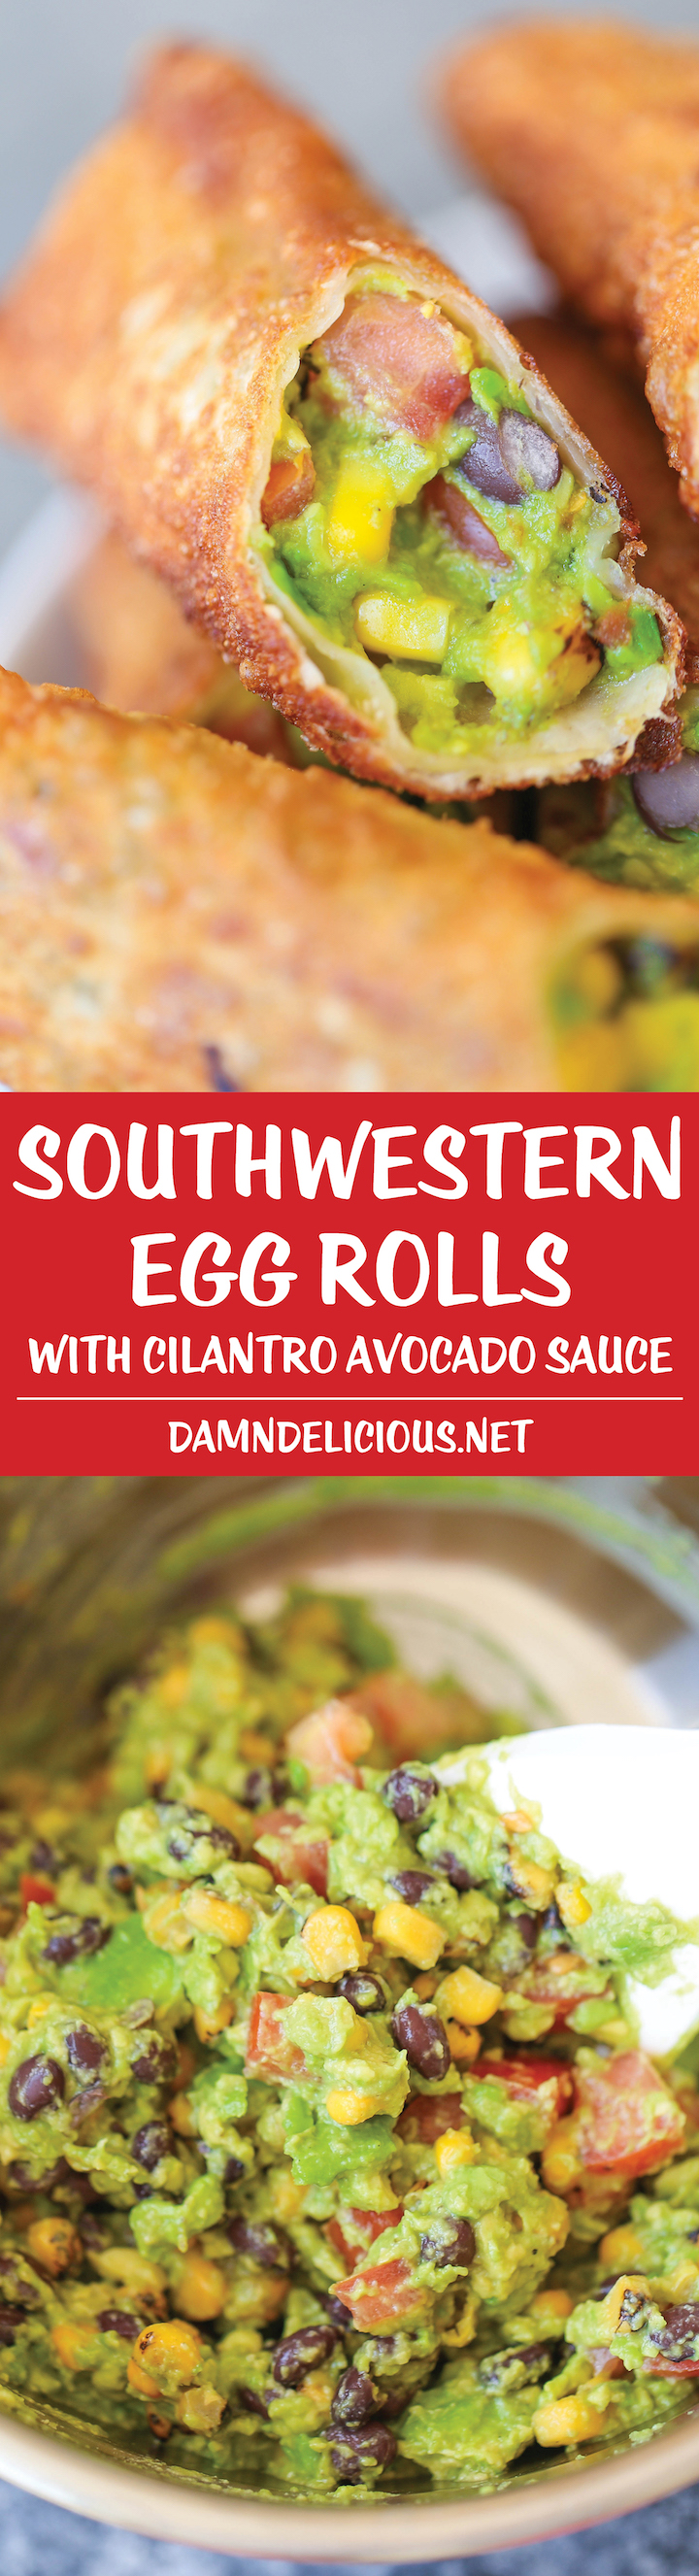 Southwestern egg rolls with cilantro avocado sauce